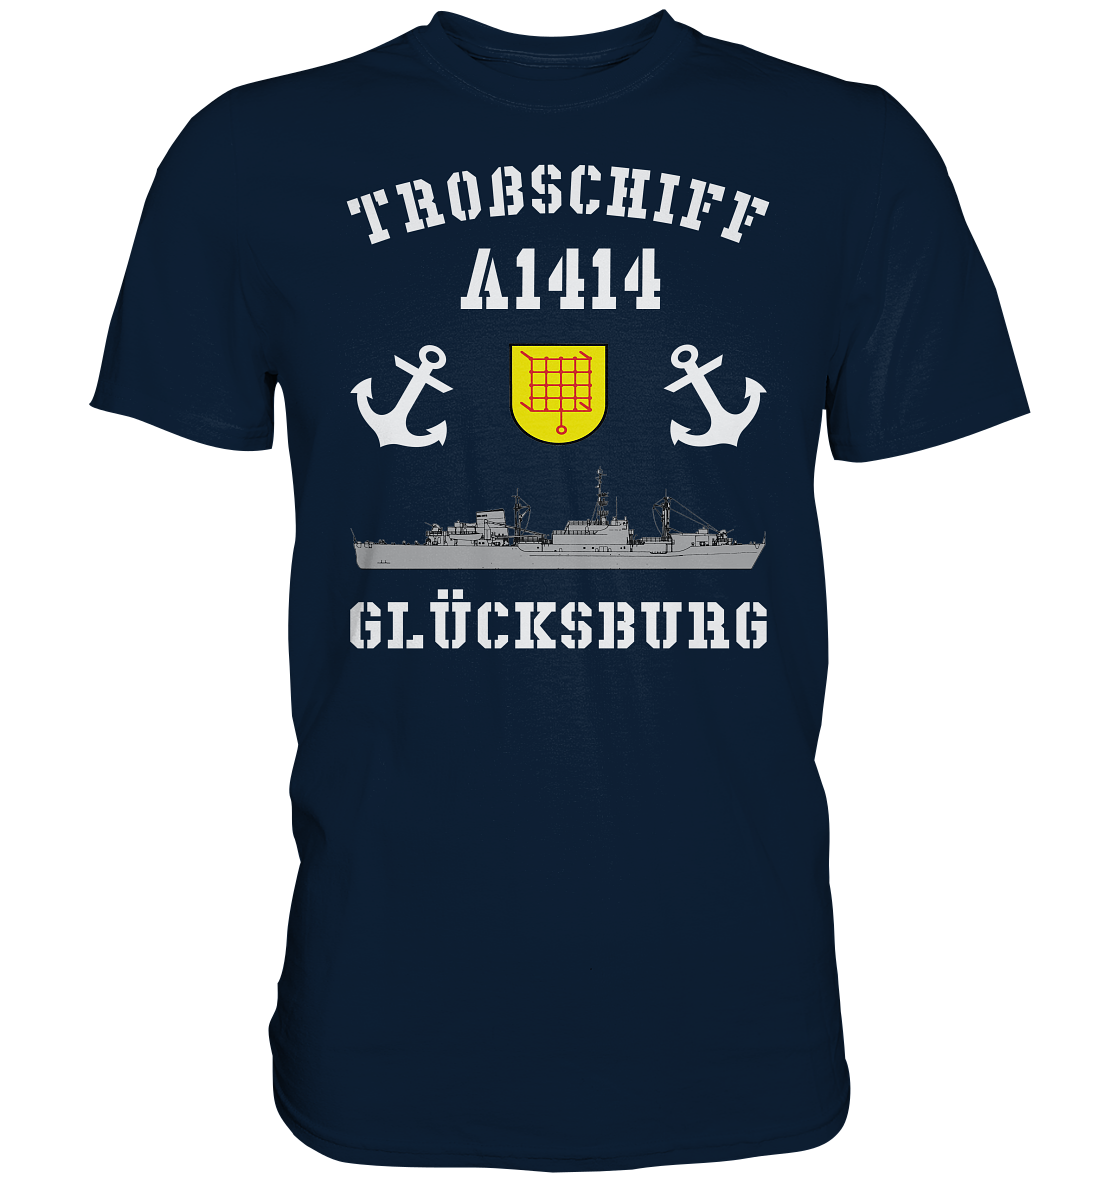 Troßschiff A1414 GLÜCKSBURG - Premium Shirt